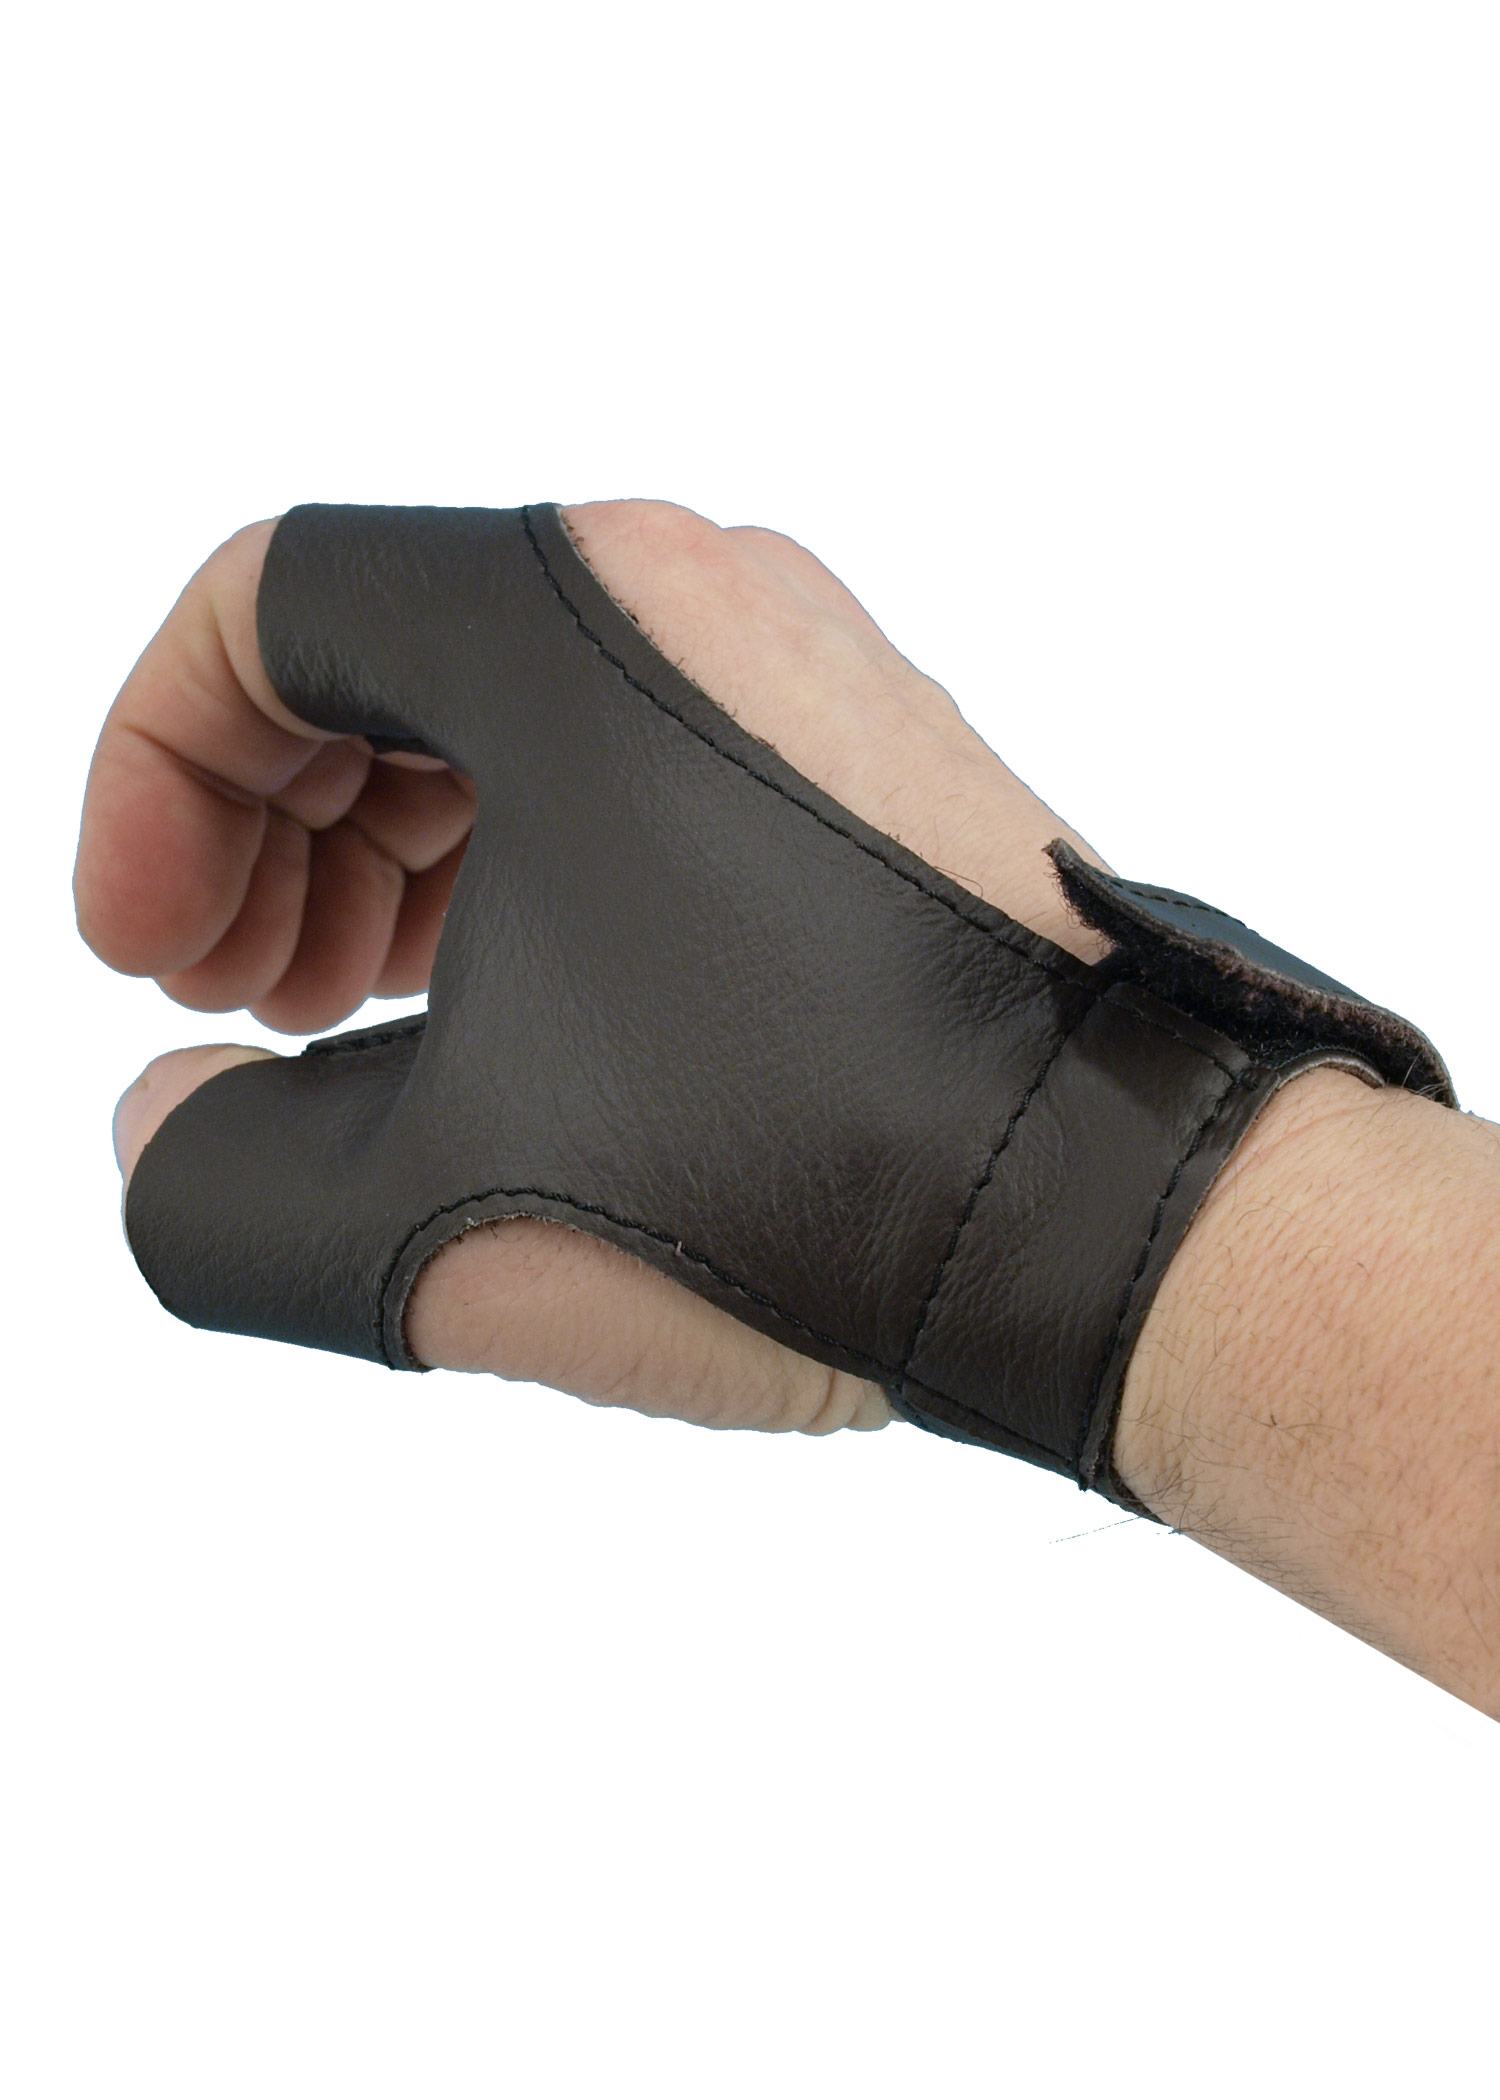 Bogenhandschuh aus Leder für Linkshänder, braun, Größe XL